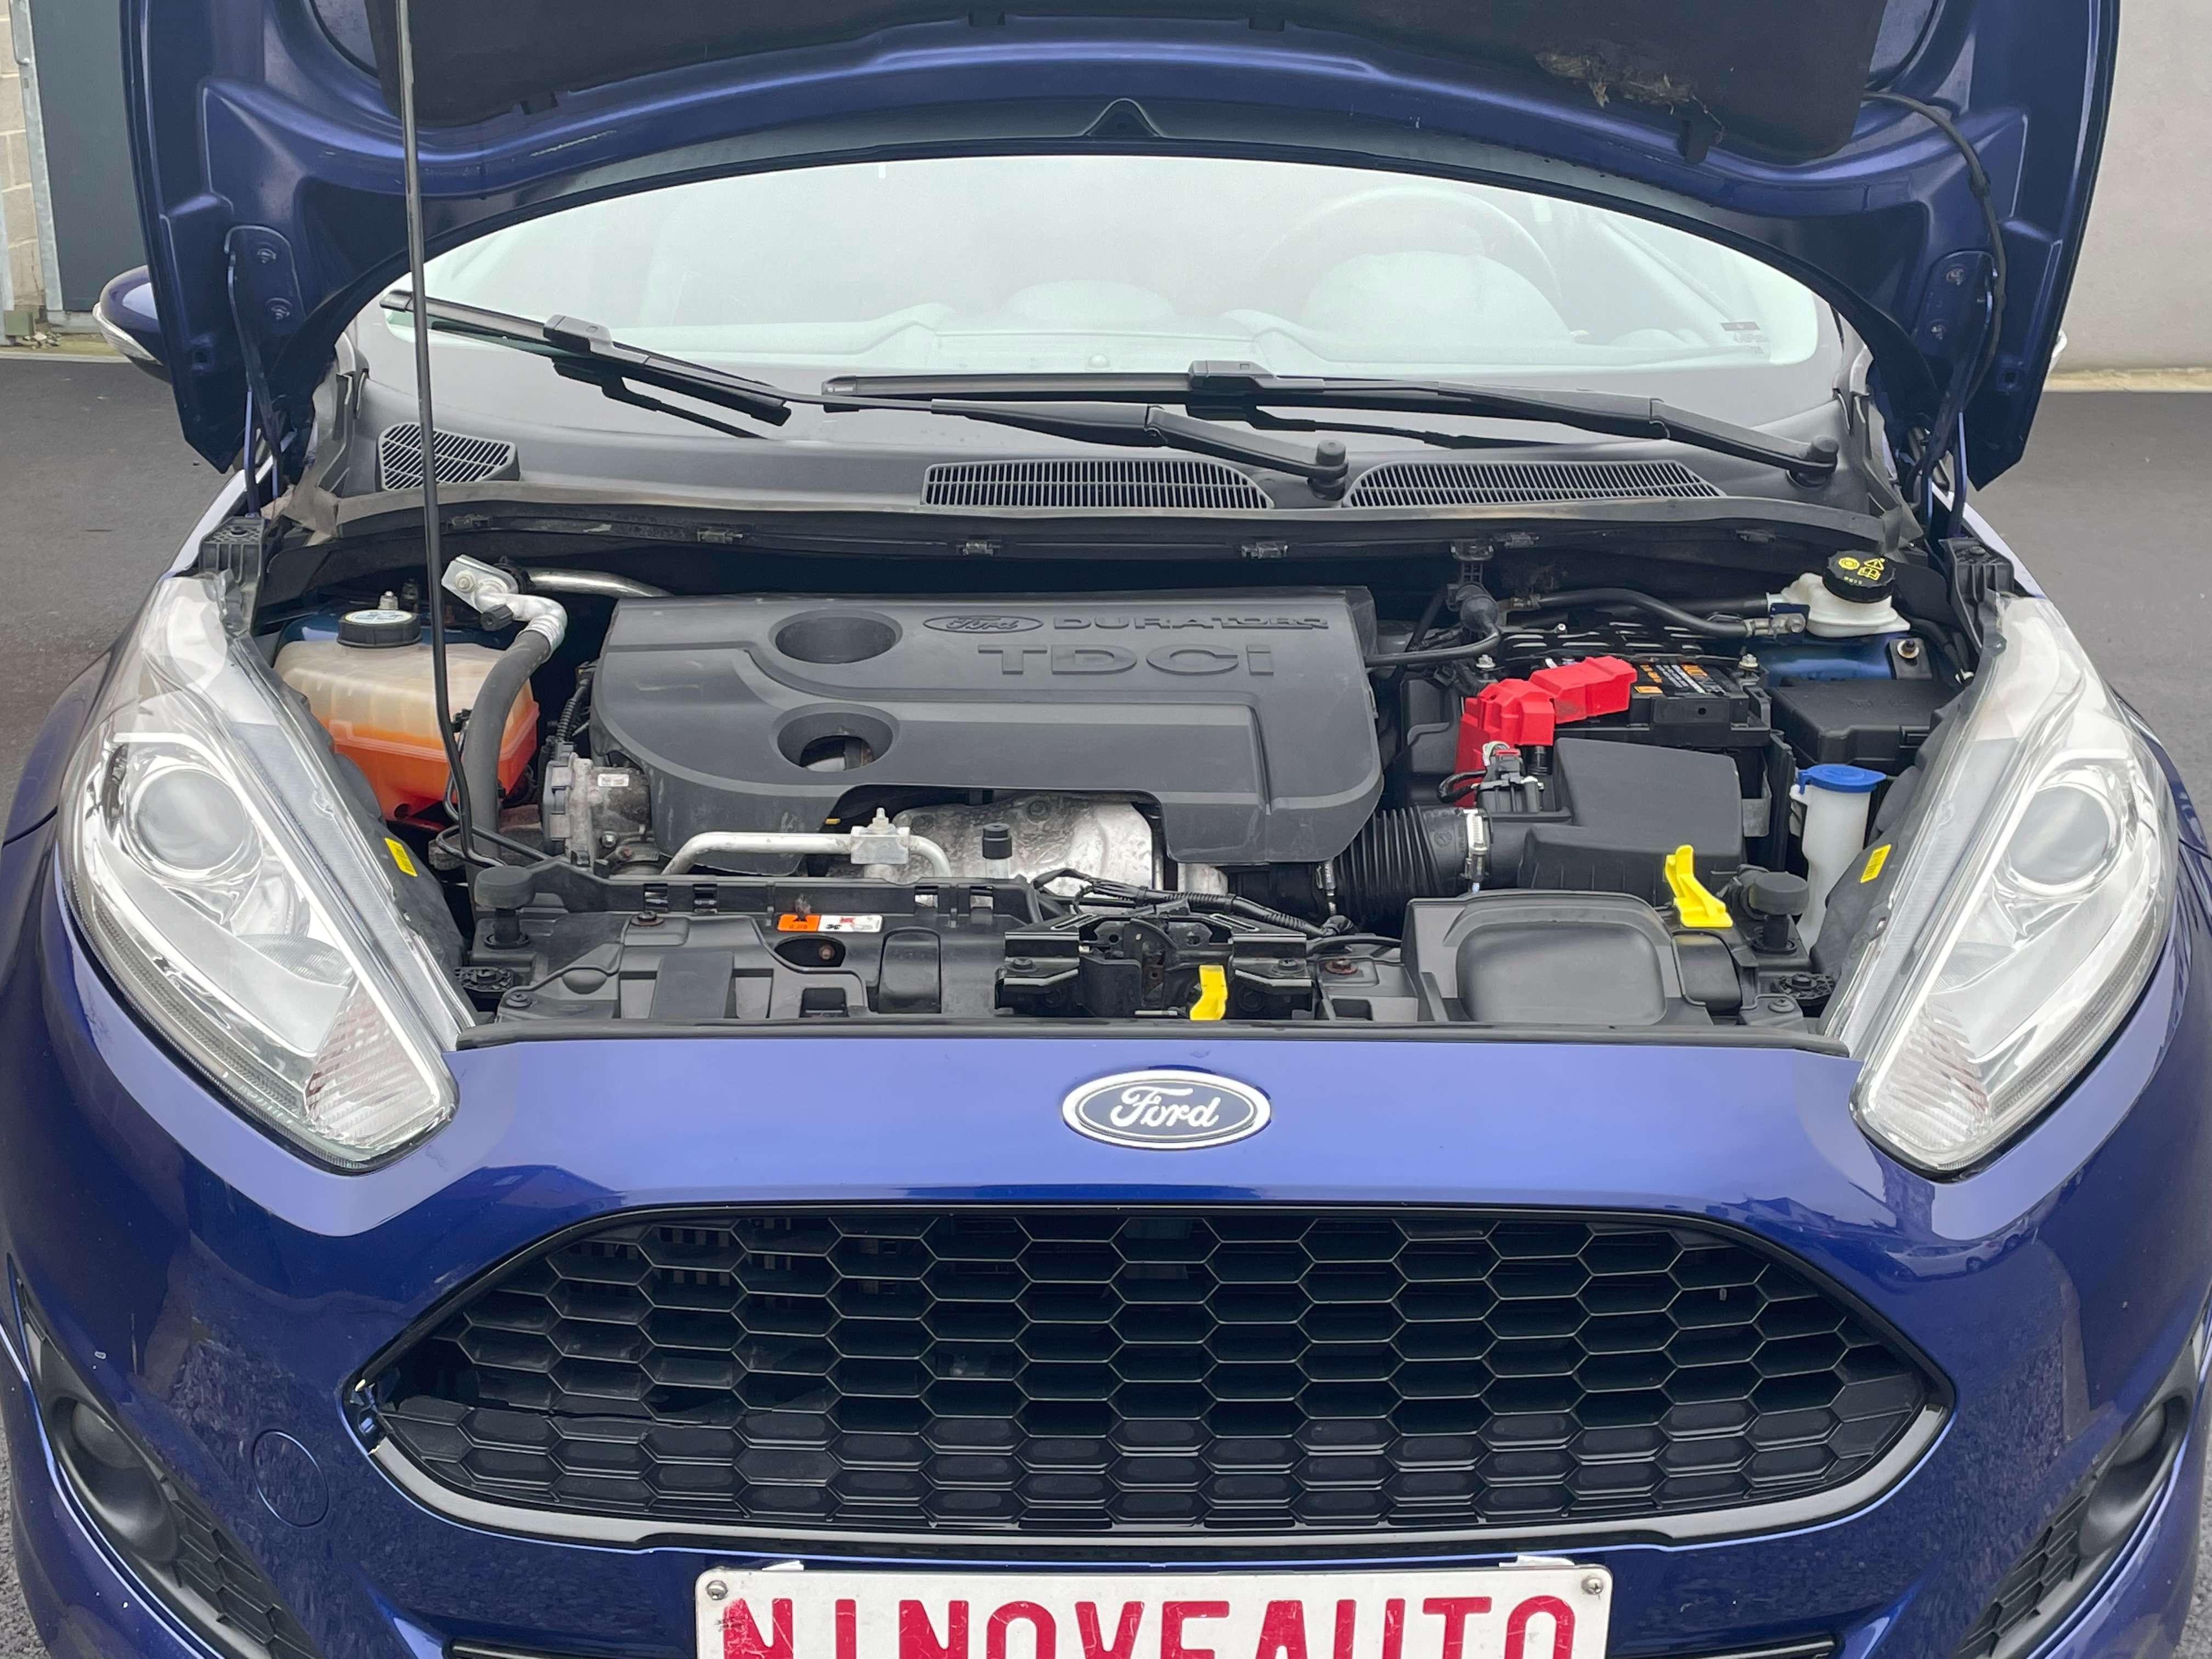 Ninove auto - Ford Fiesta